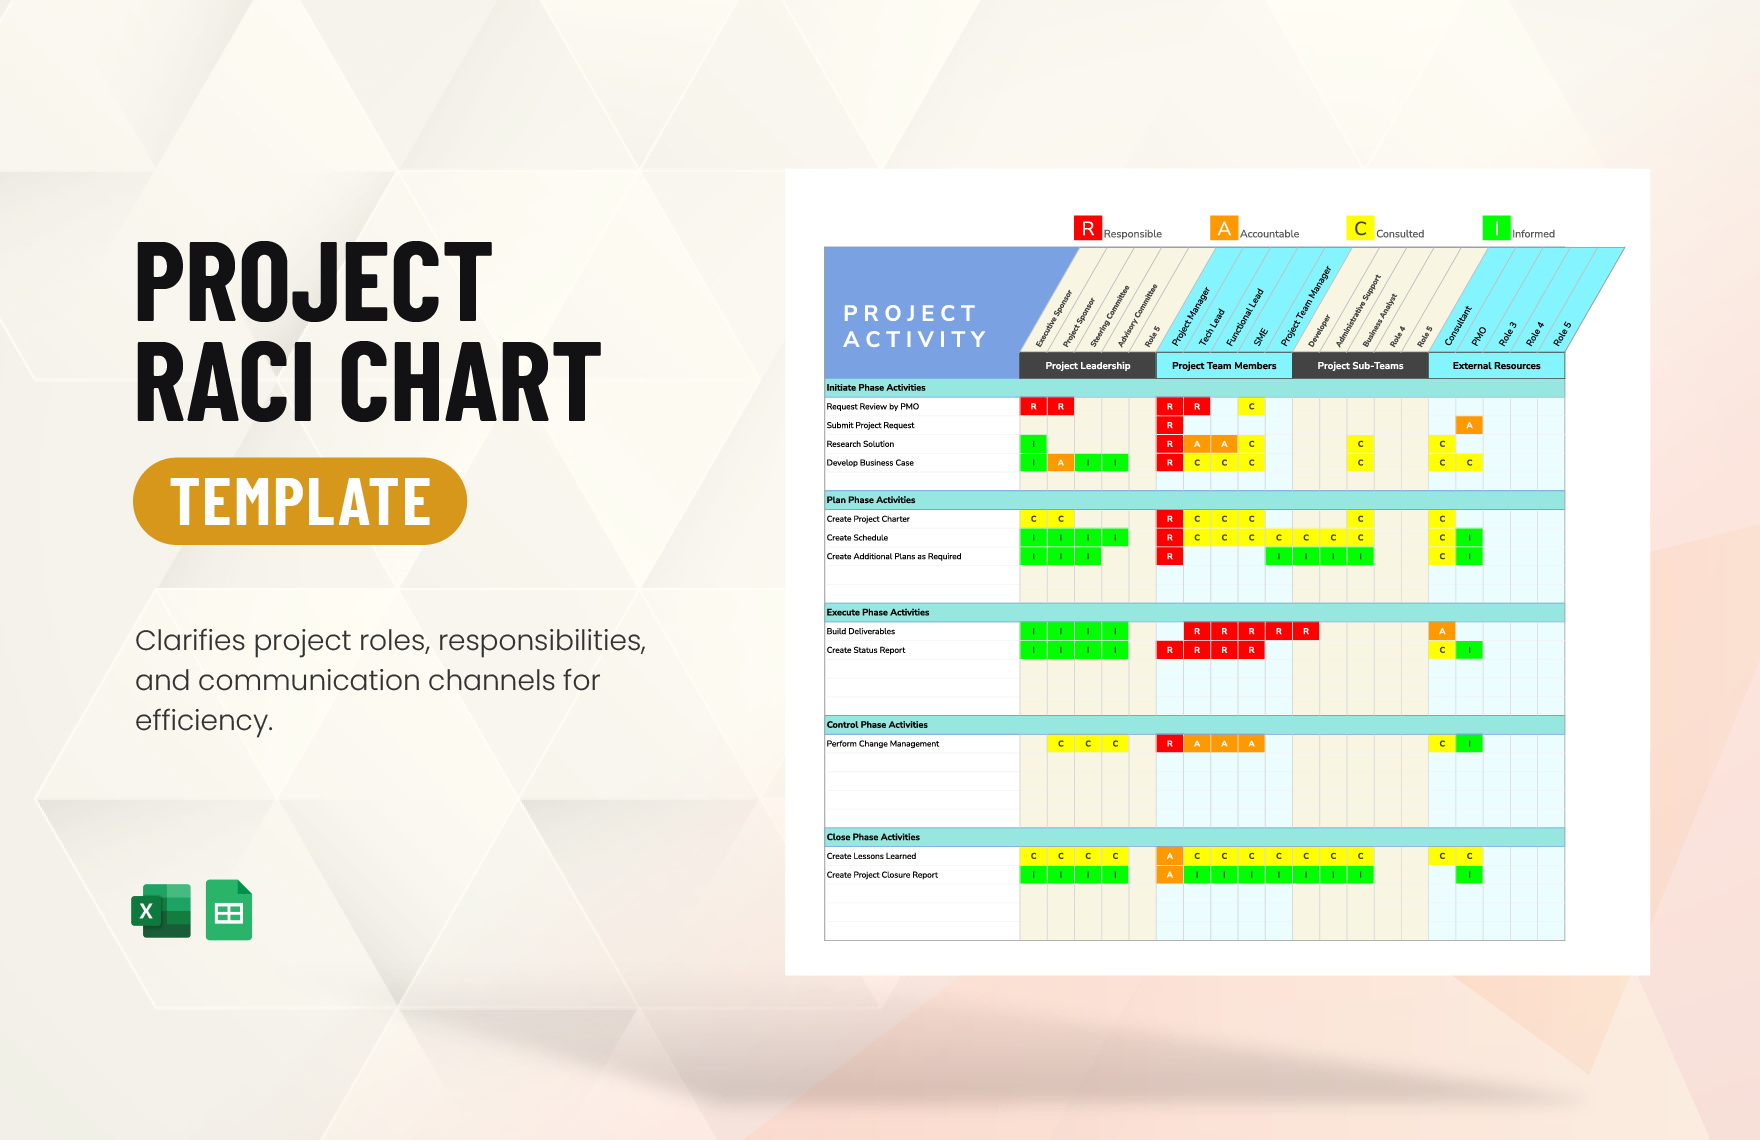 Project RACI Chart Template